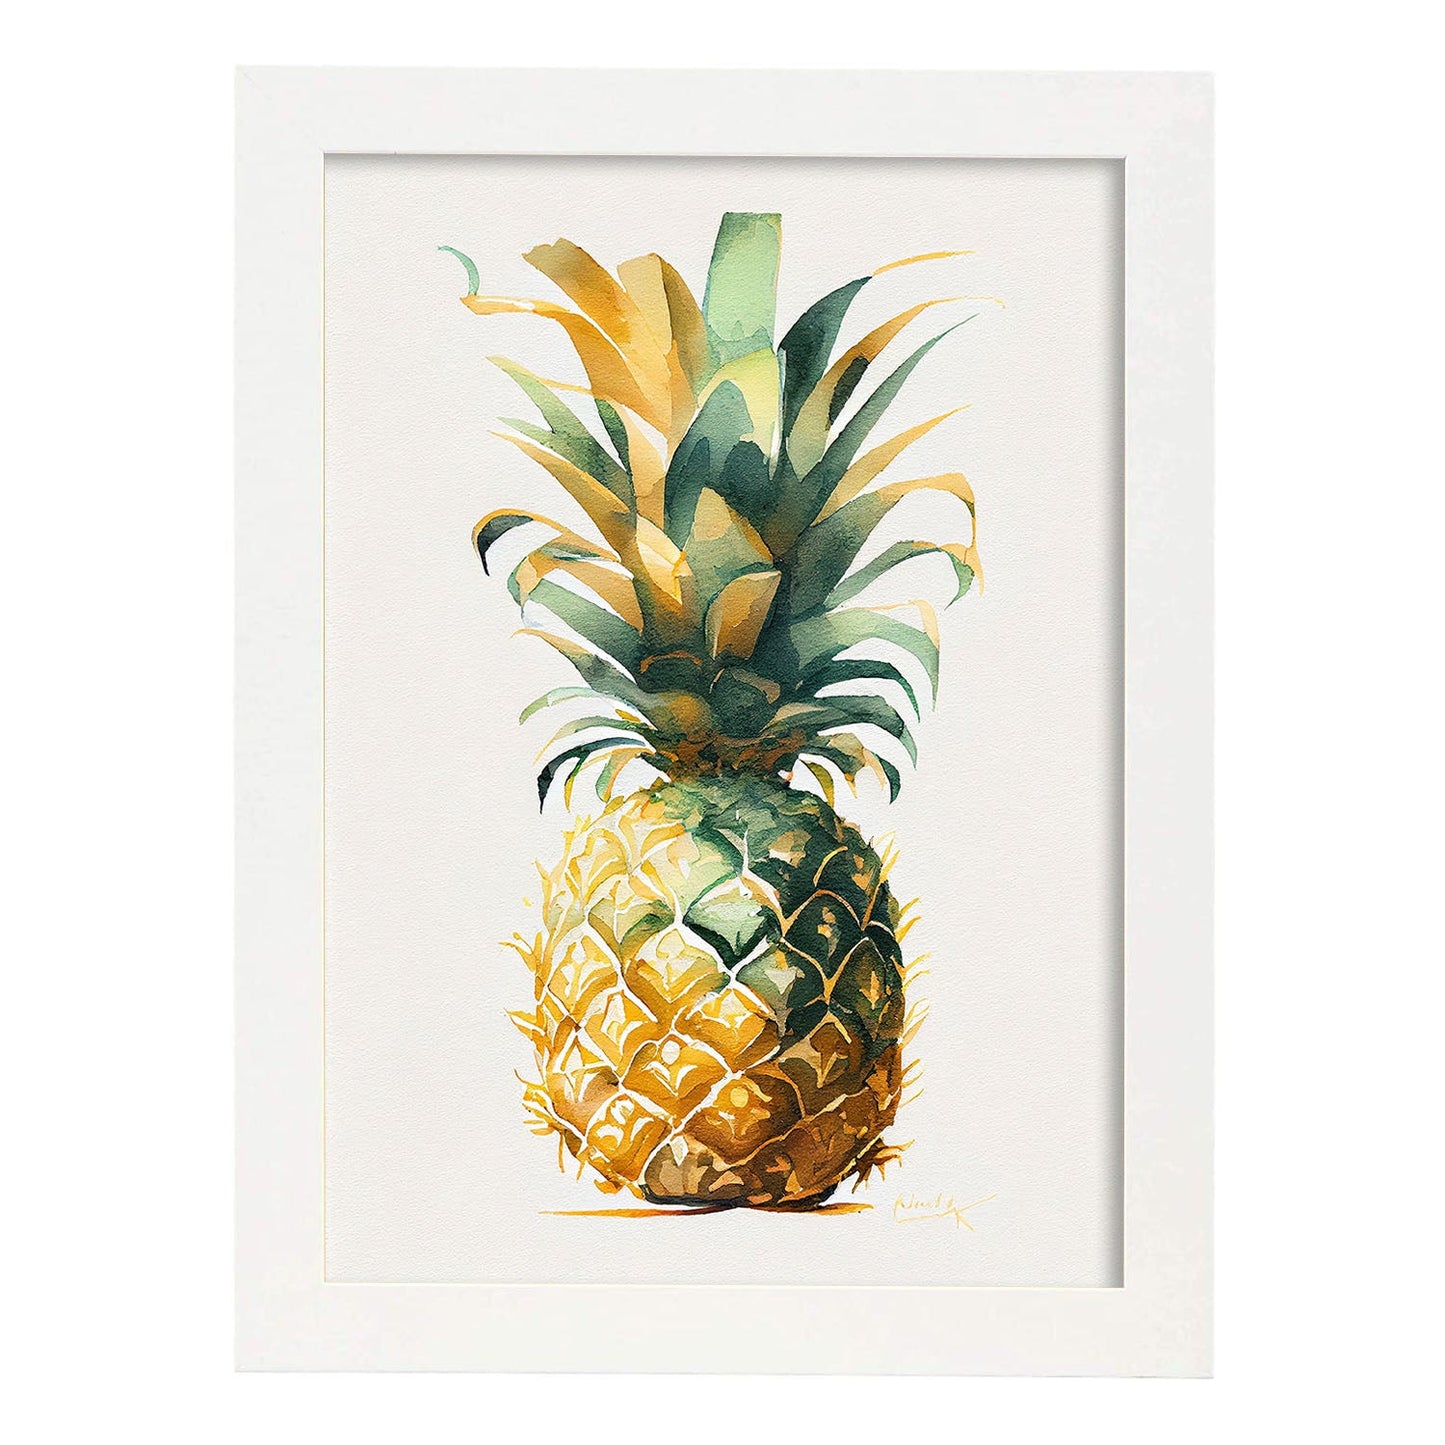 Nacnic minimalist Pineapple_4. Aesthetic Wall Art Prints for Bedroom or Living Room Design.-Artwork-Nacnic-A4-Marco Blanco-Nacnic Estudio SL